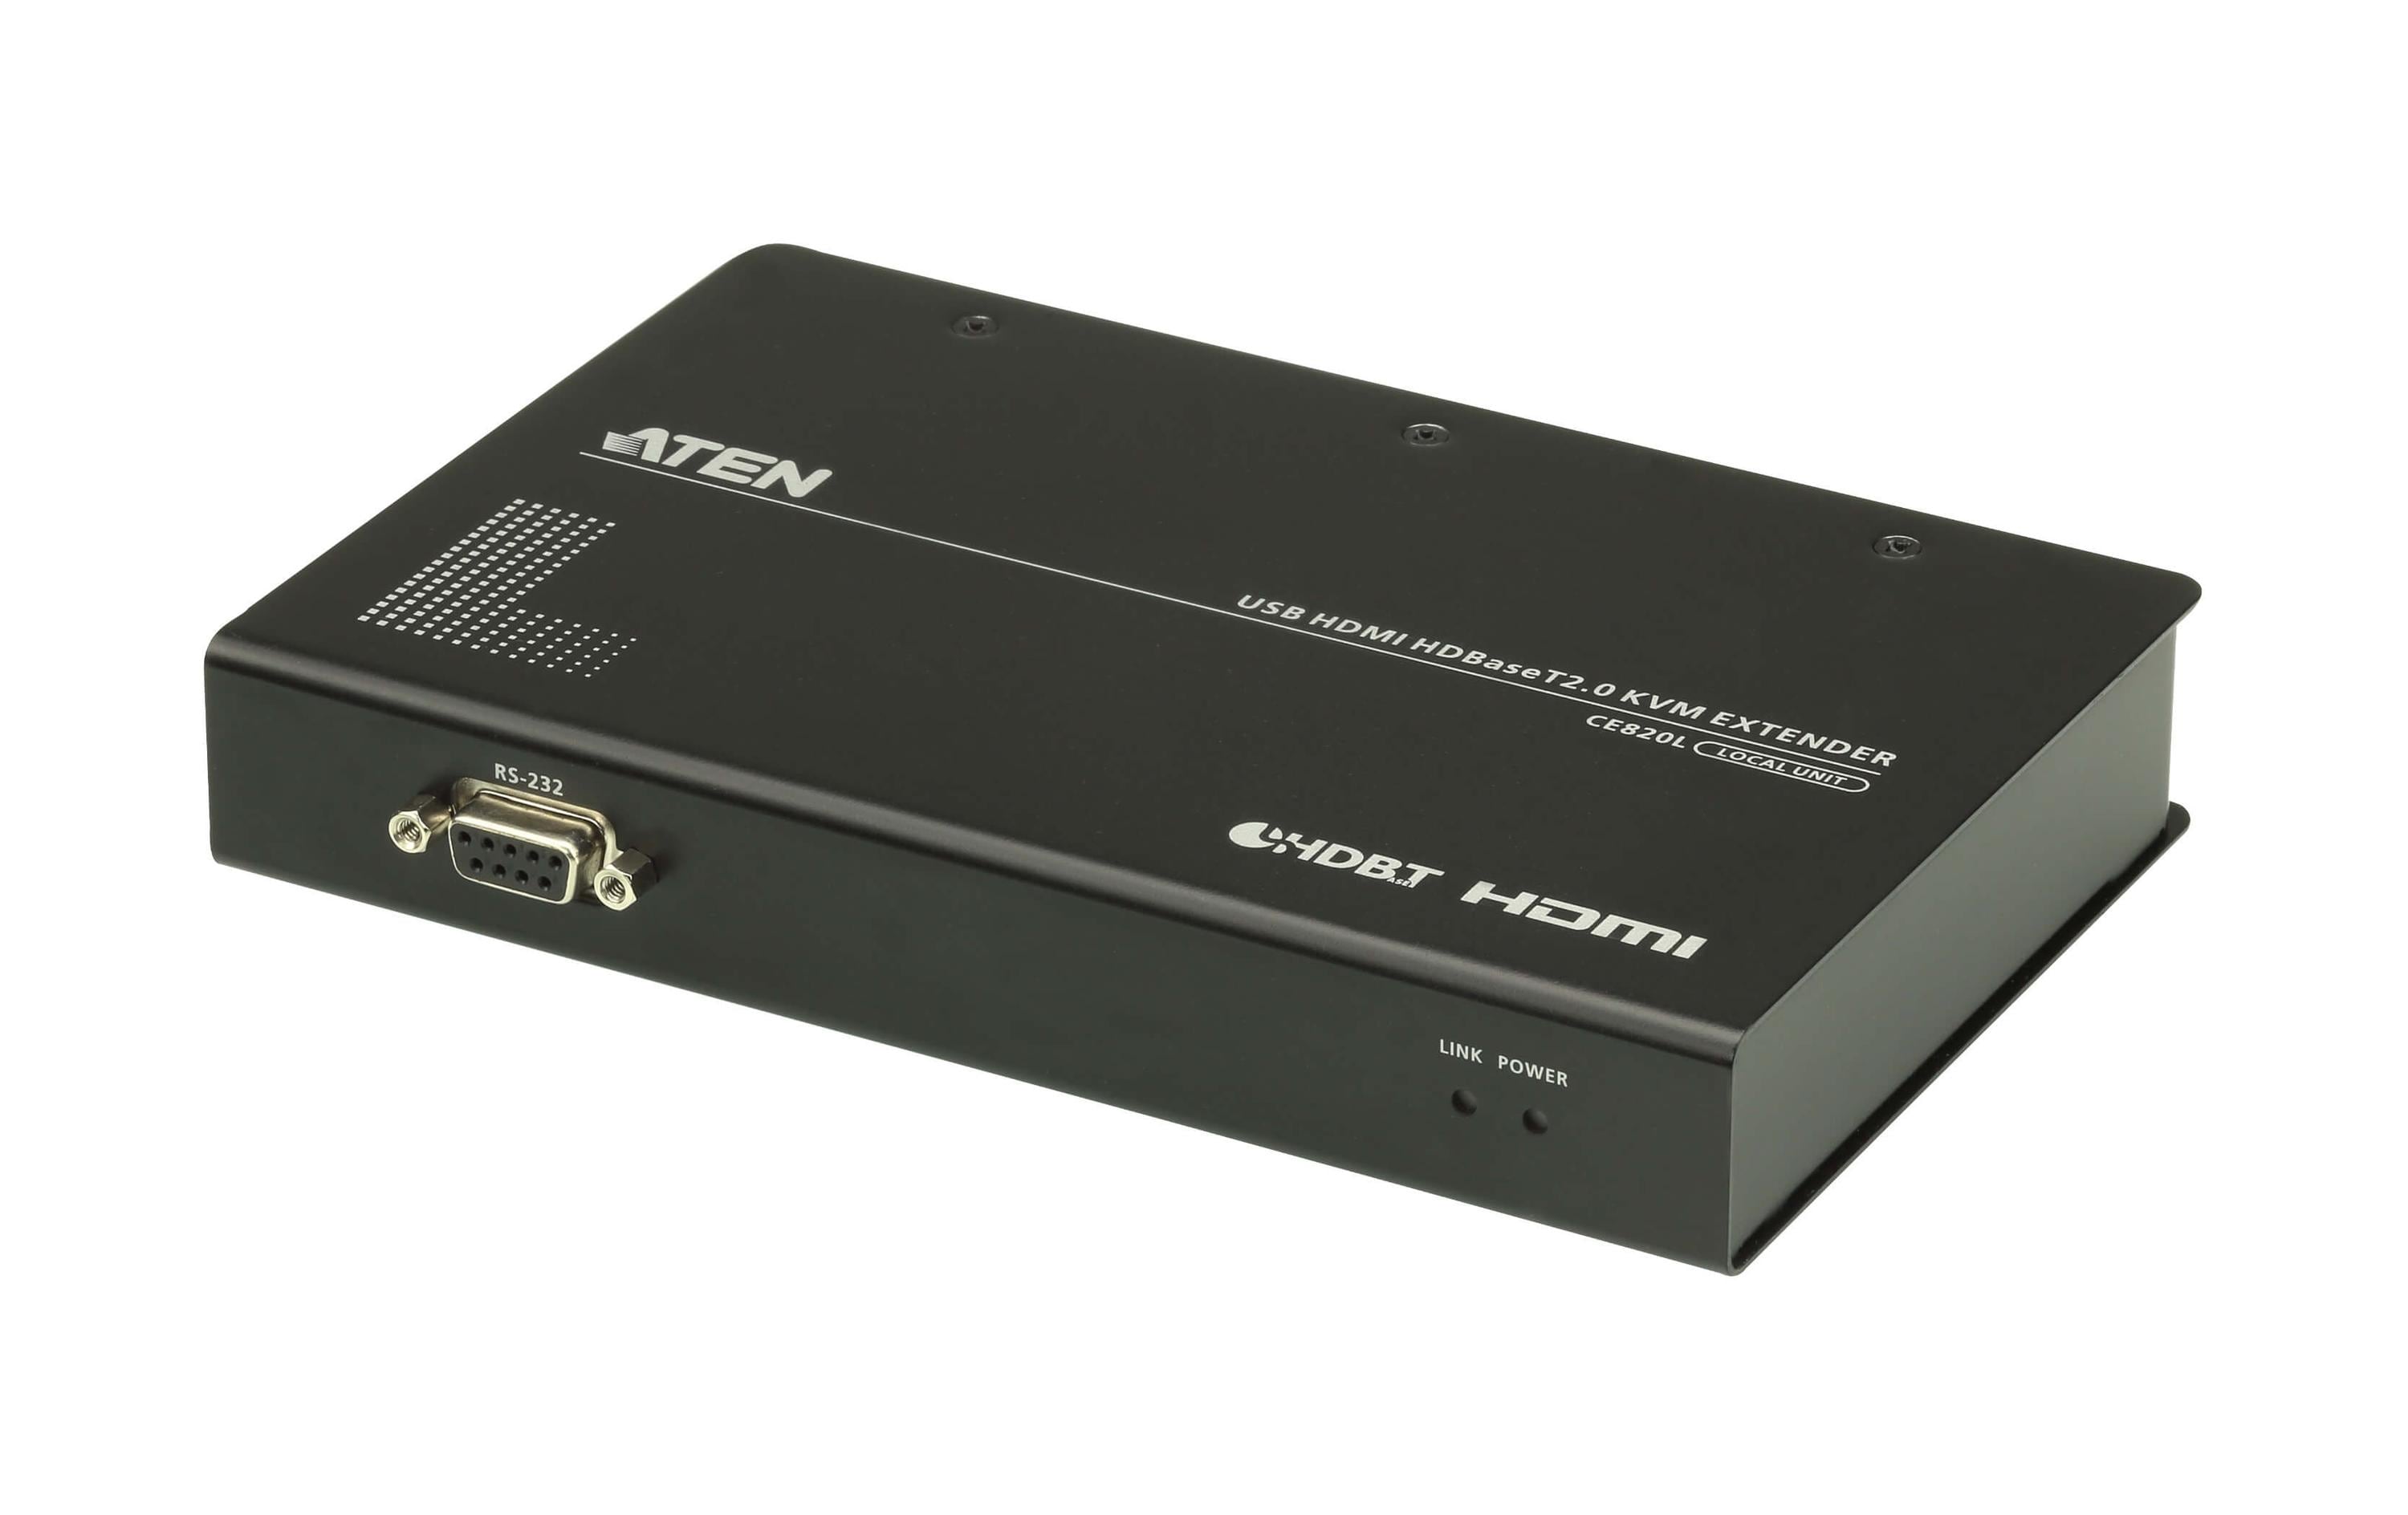 Aten HDMI-Extender CE820 Set